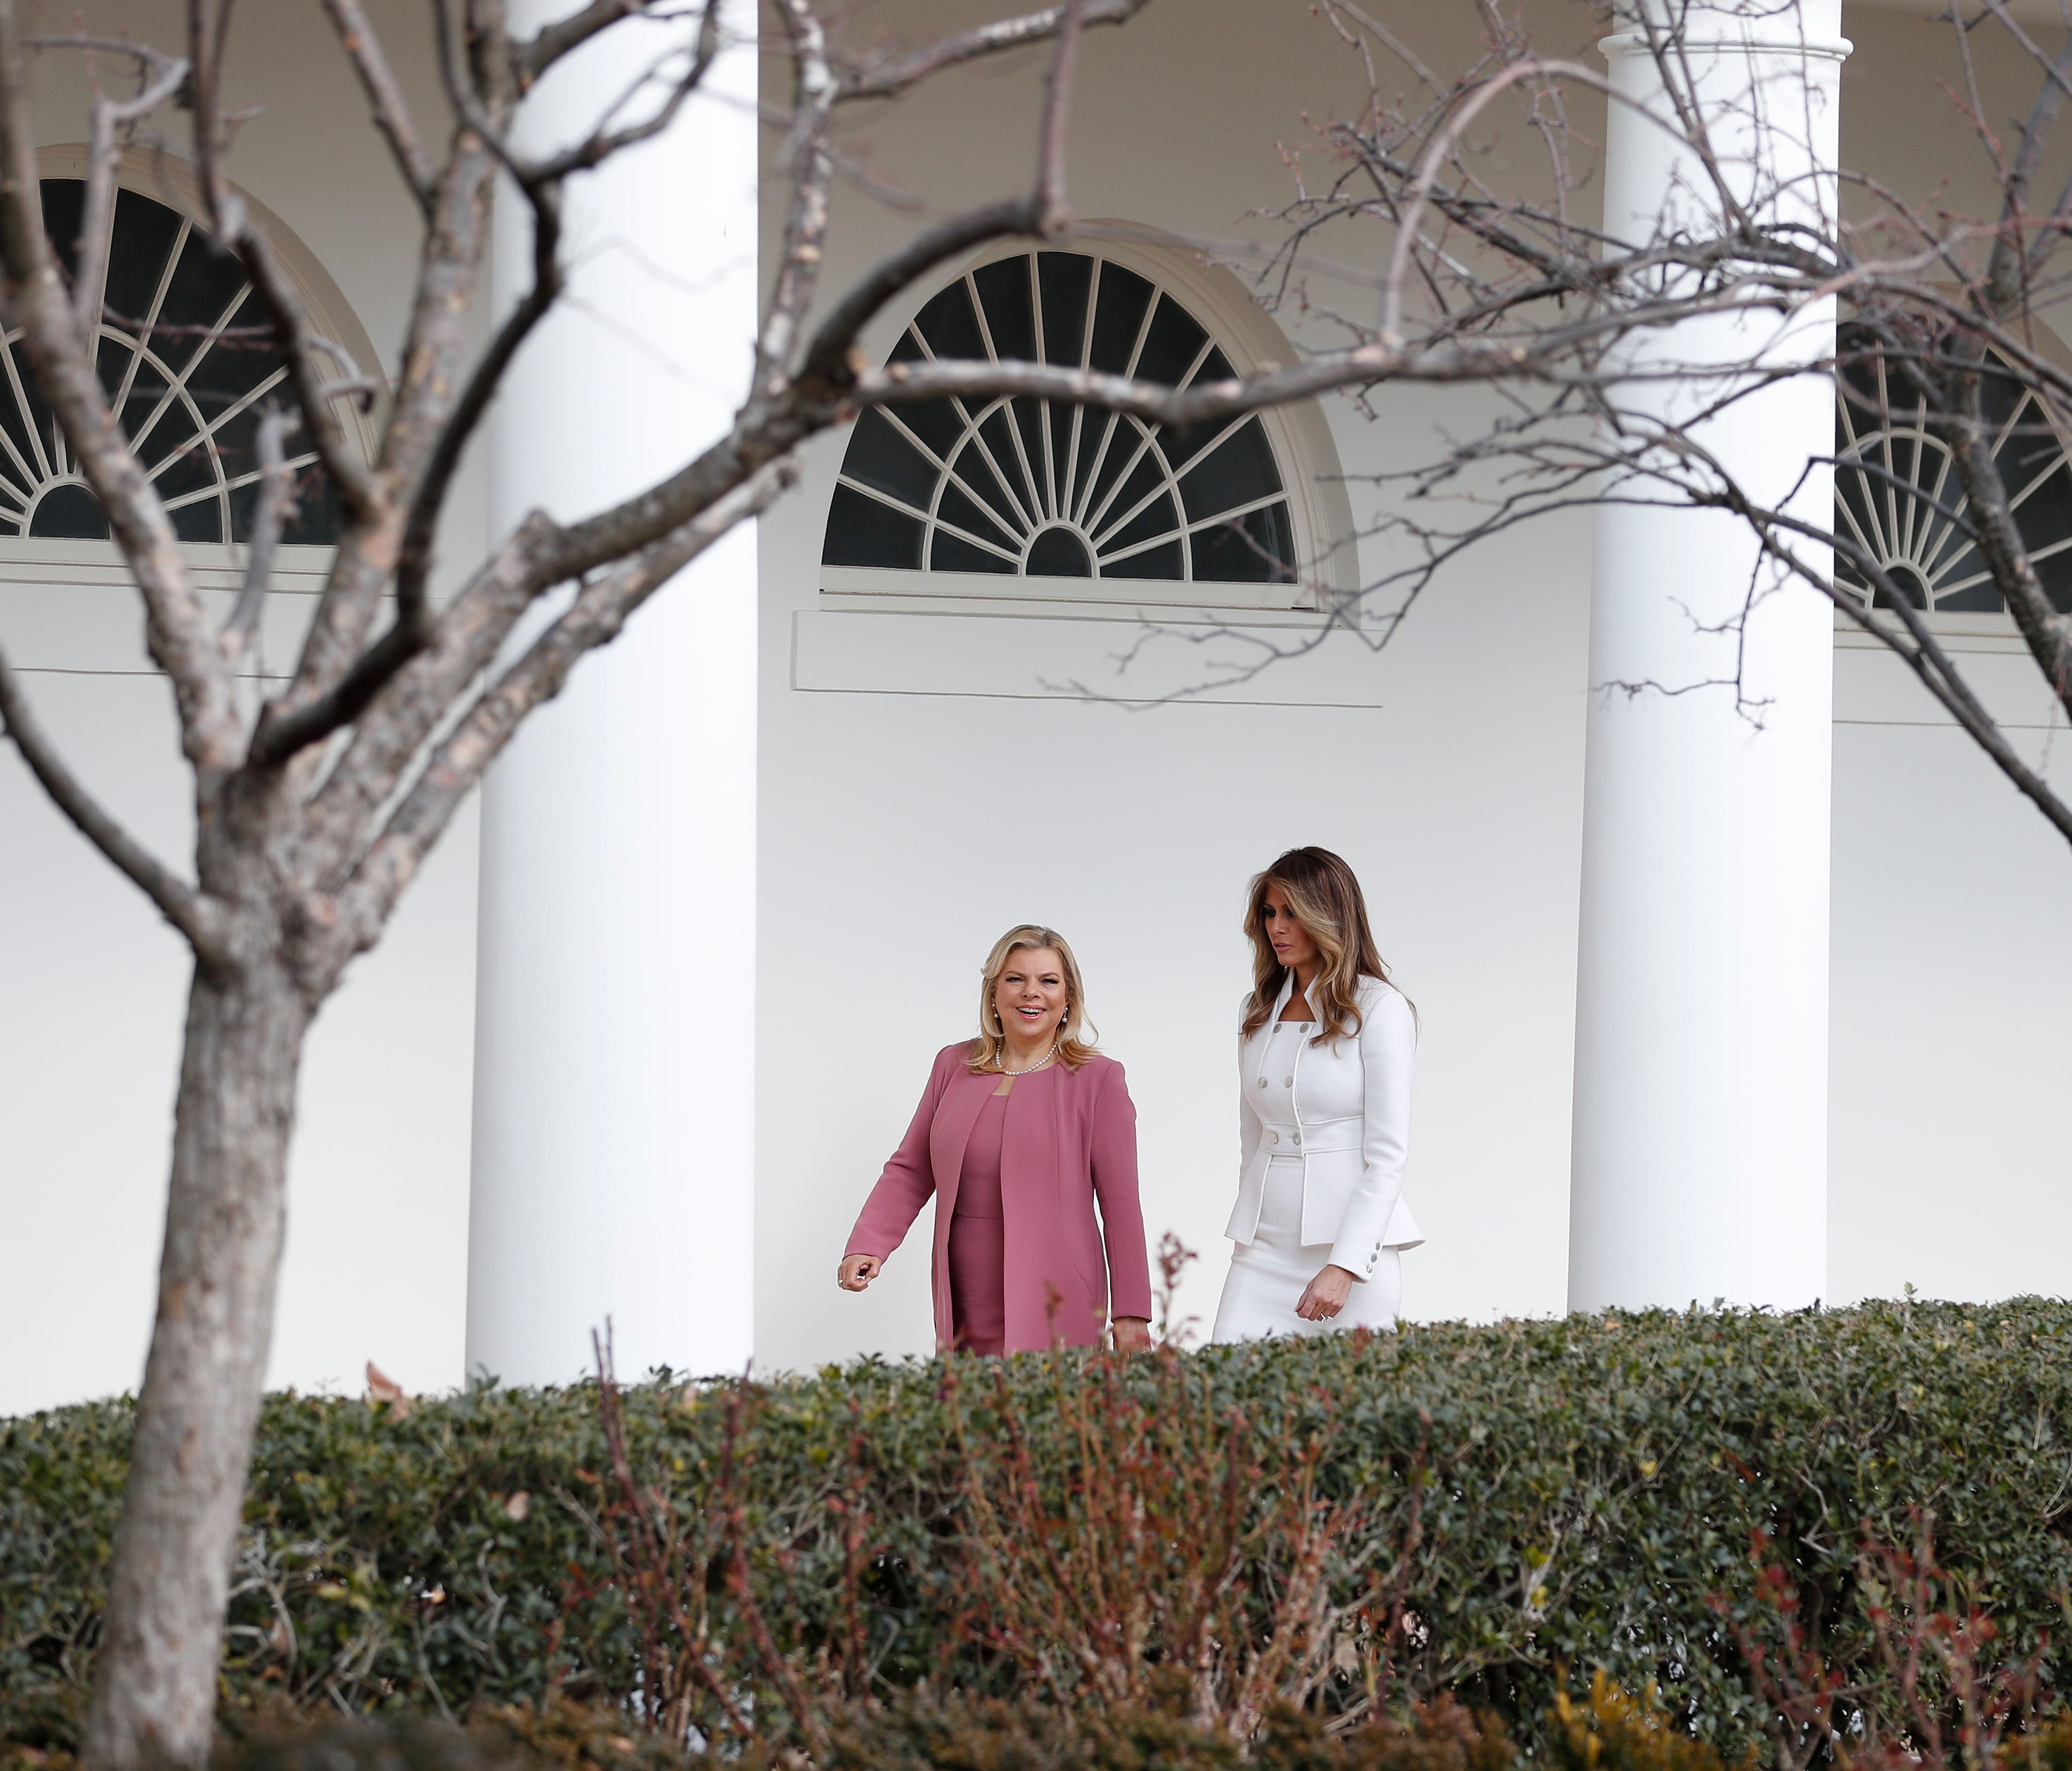 First lady Melania Trump and Sara Netanyahu, wife of Israeli Prime Minister Benjamin Netanyahu, walk along the colonnade of the White House in Washington.